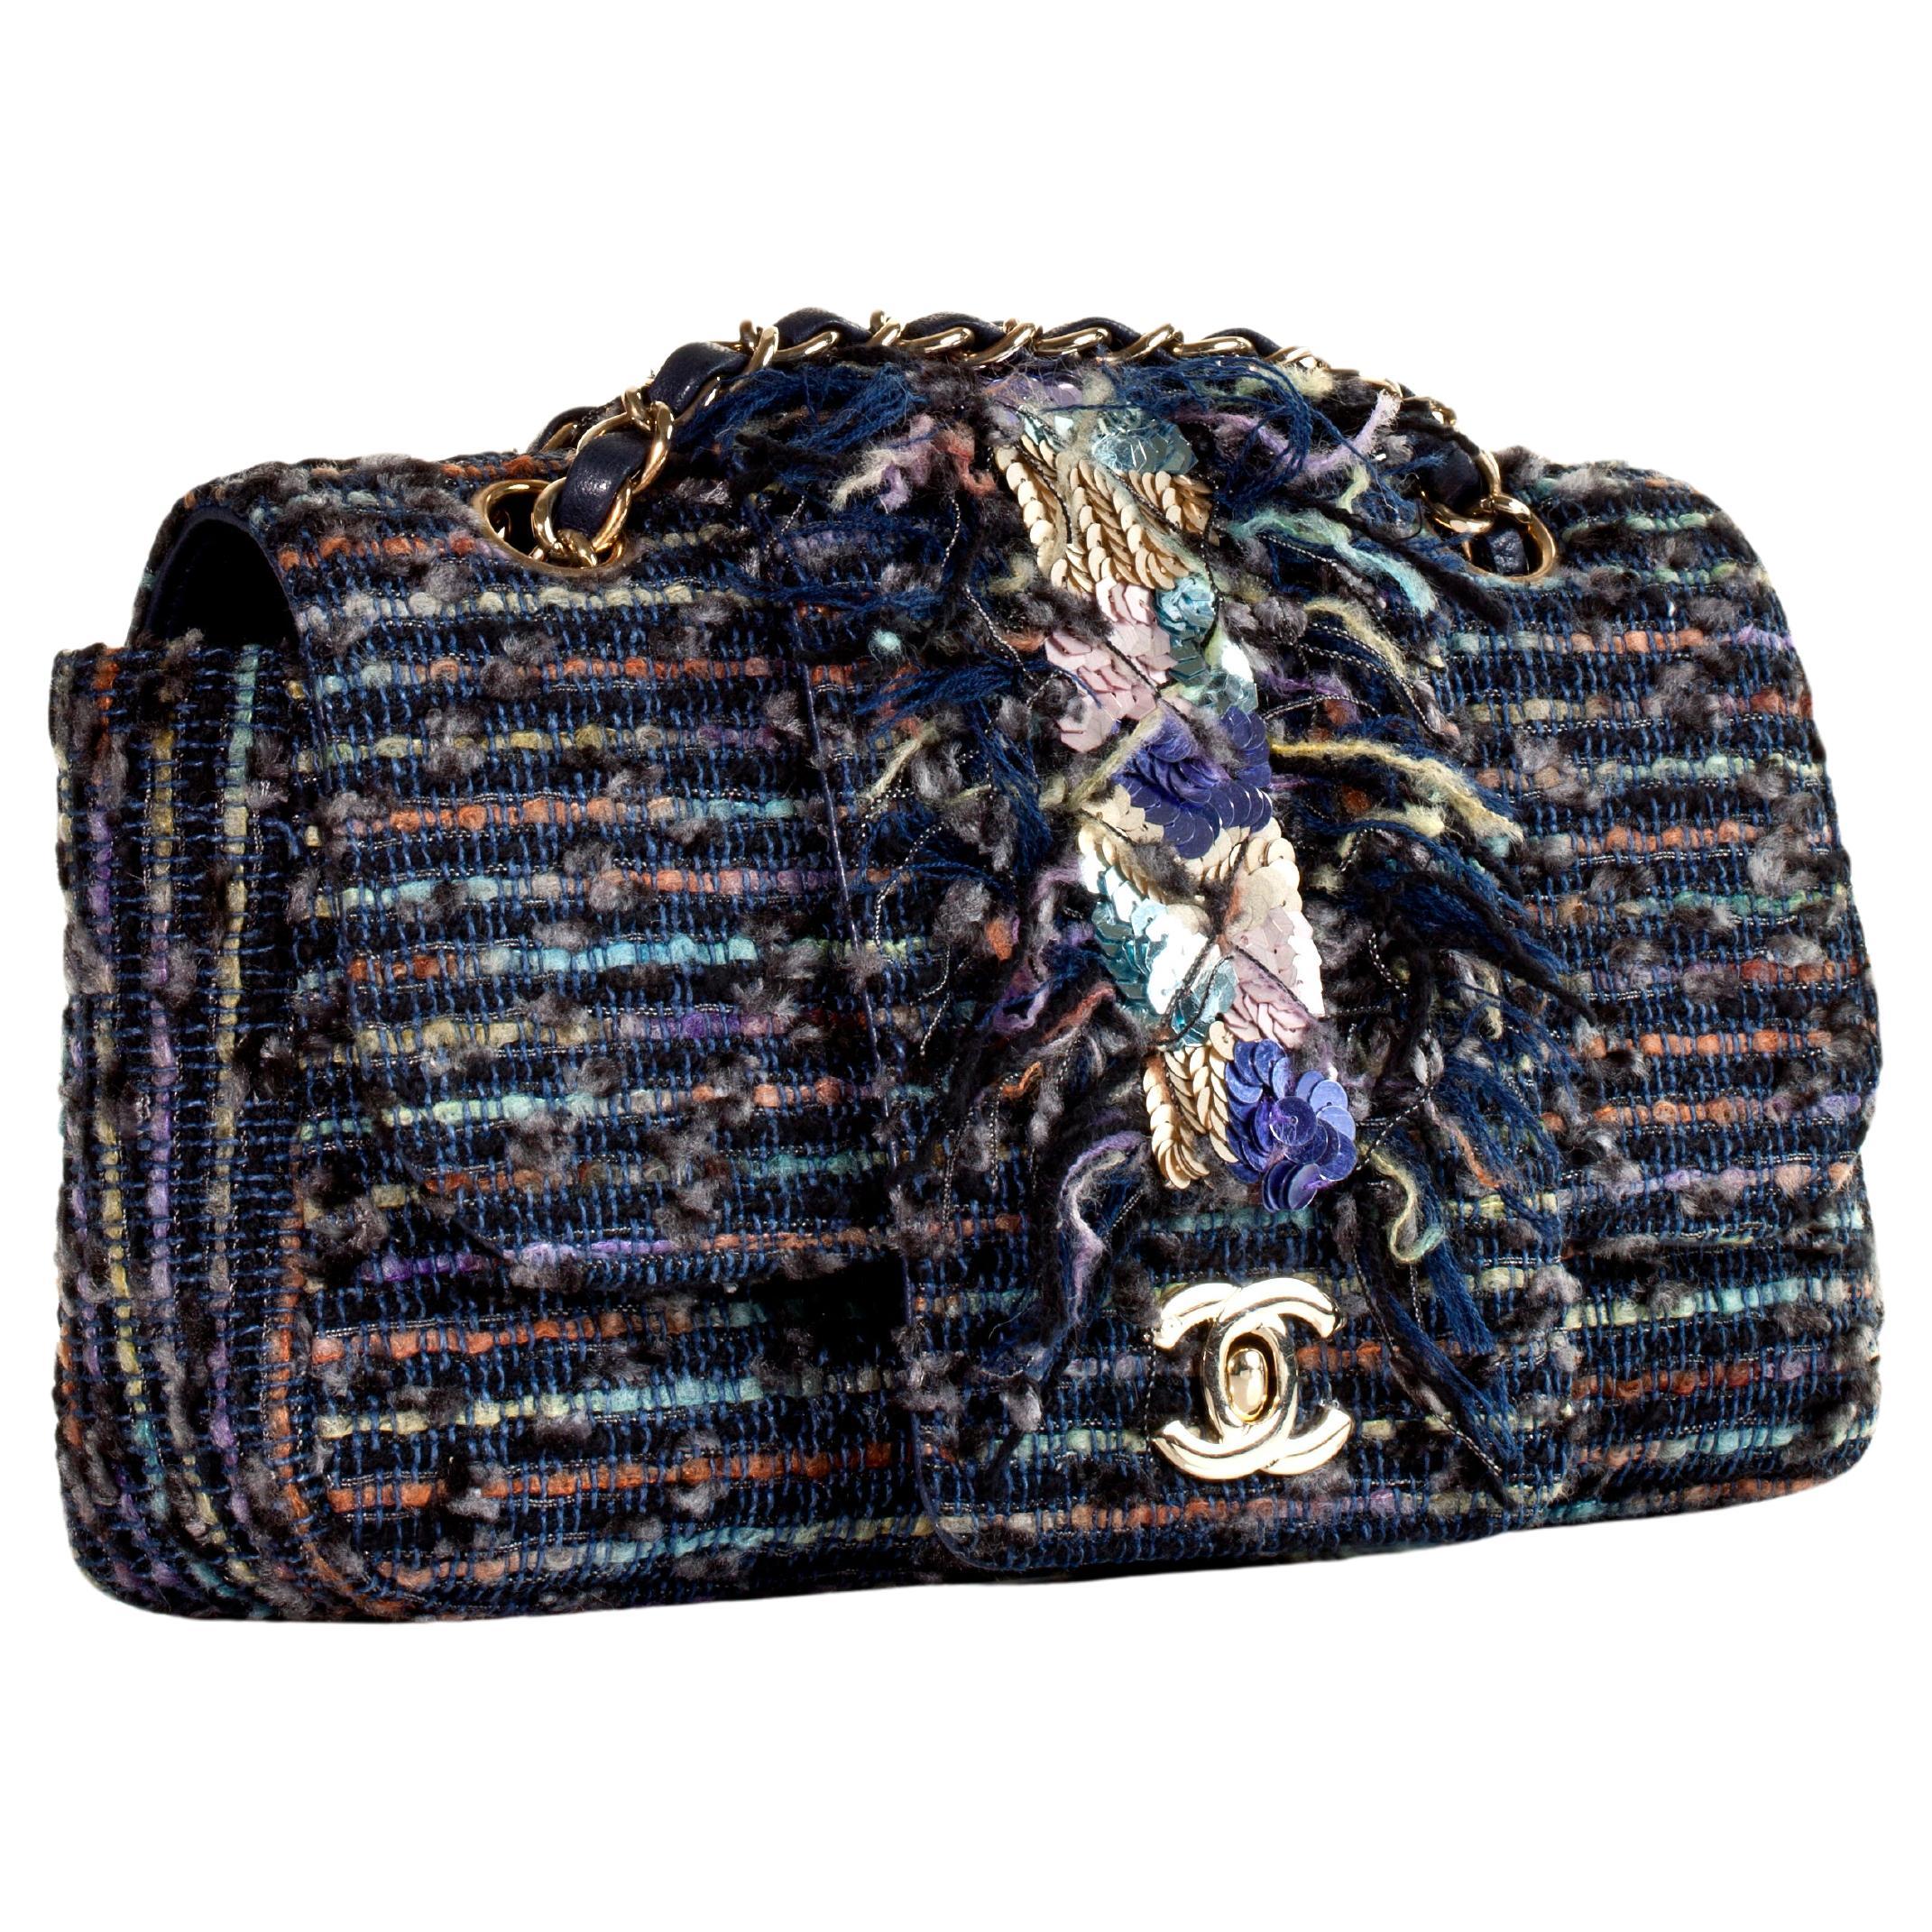 Chanel 2005 Classic Flap Vintage Jeweled Sequin Mermaid Navy Blue Tweed Bag